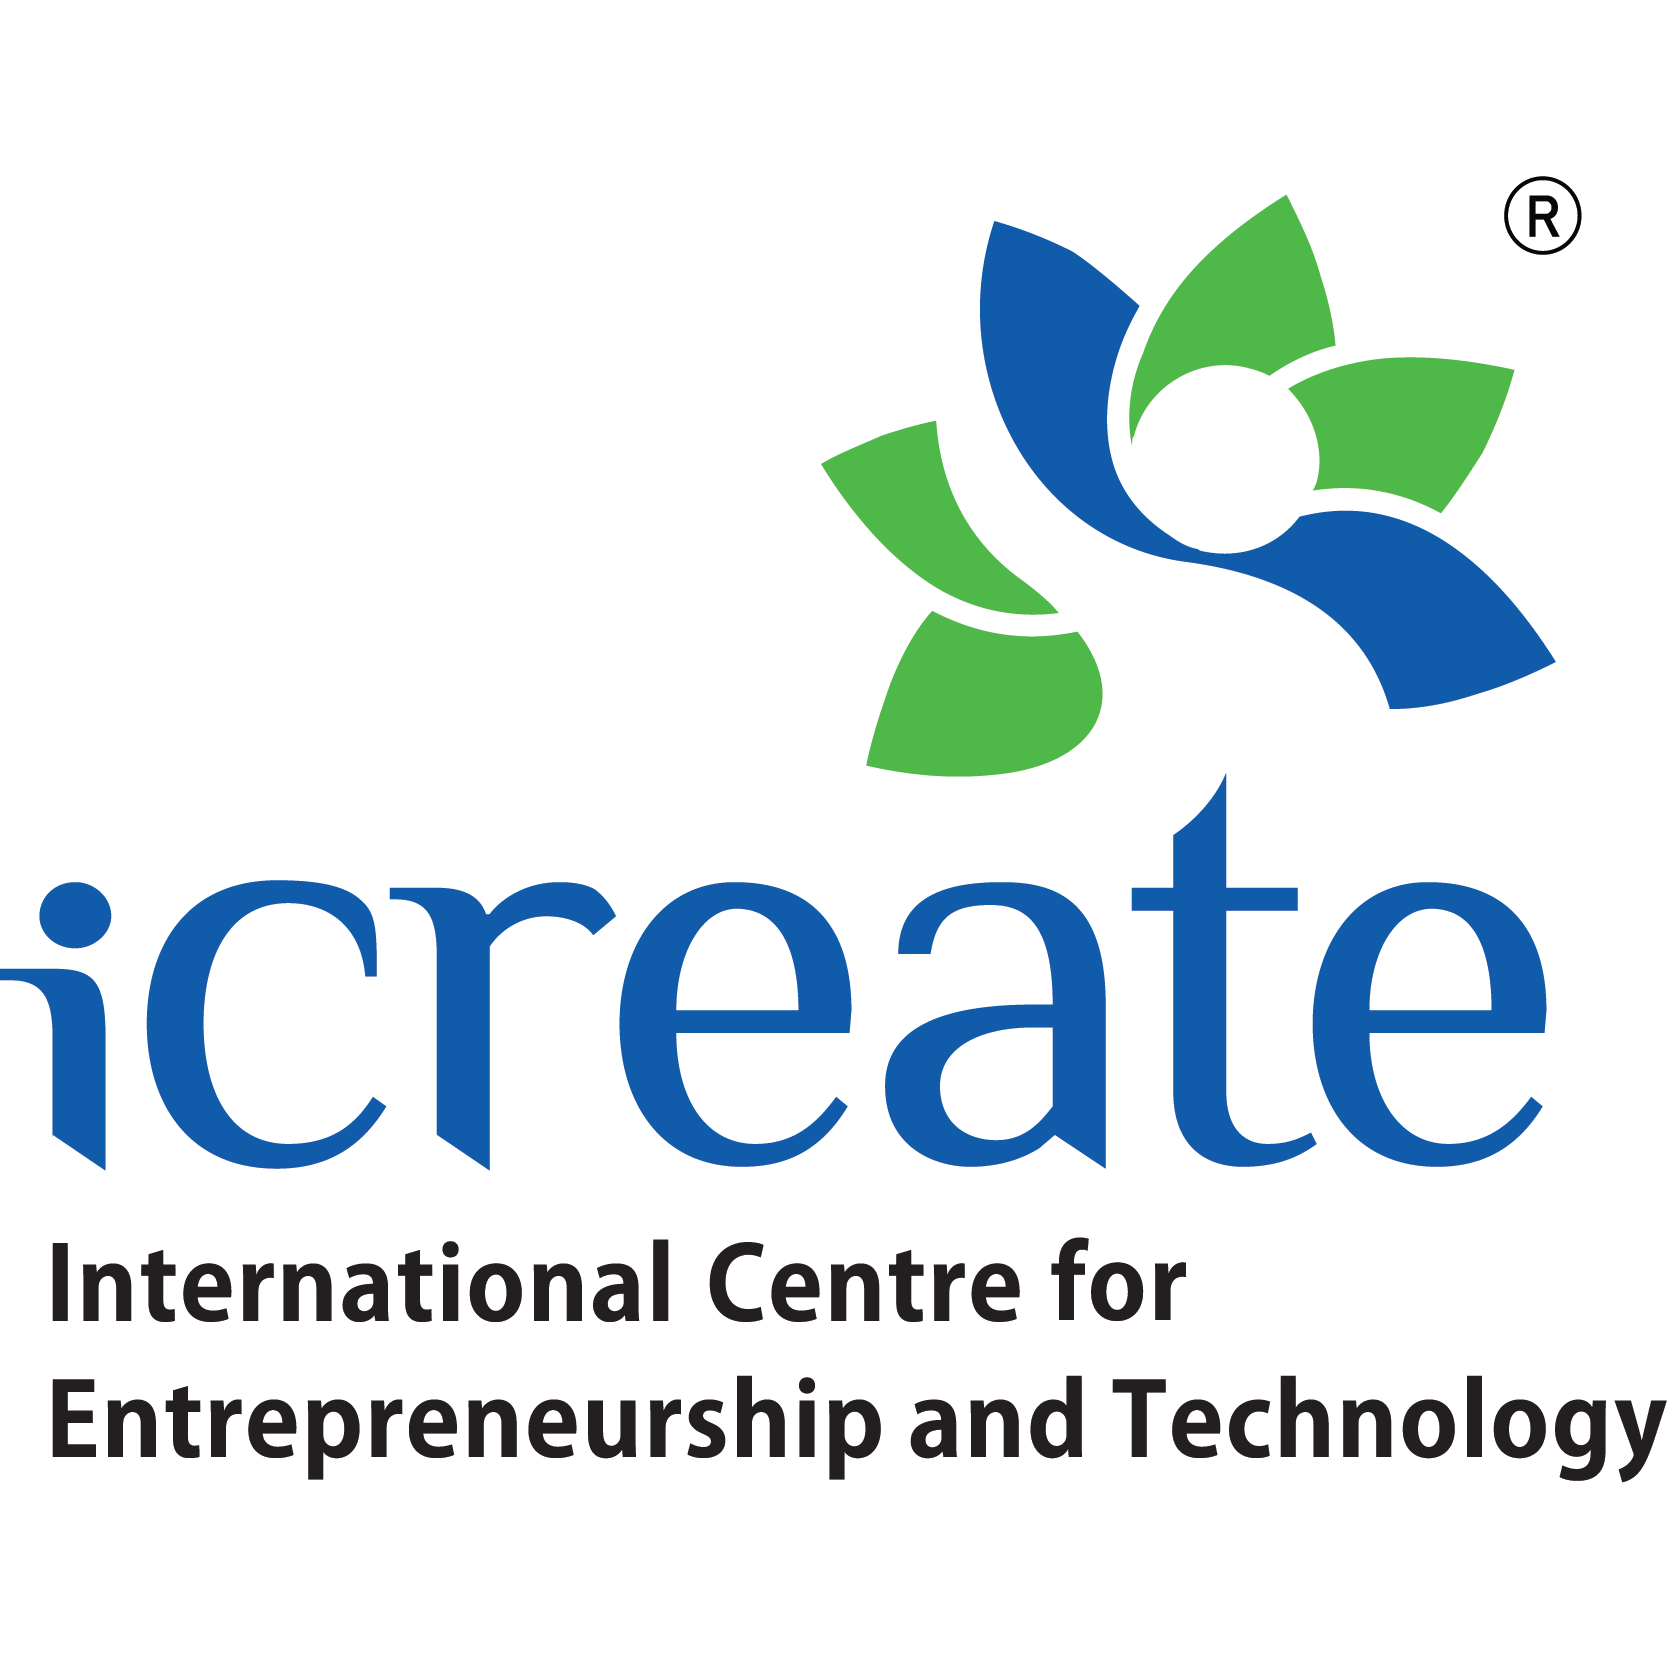 iCreate - International Centre for Technology and Entrepreneurship